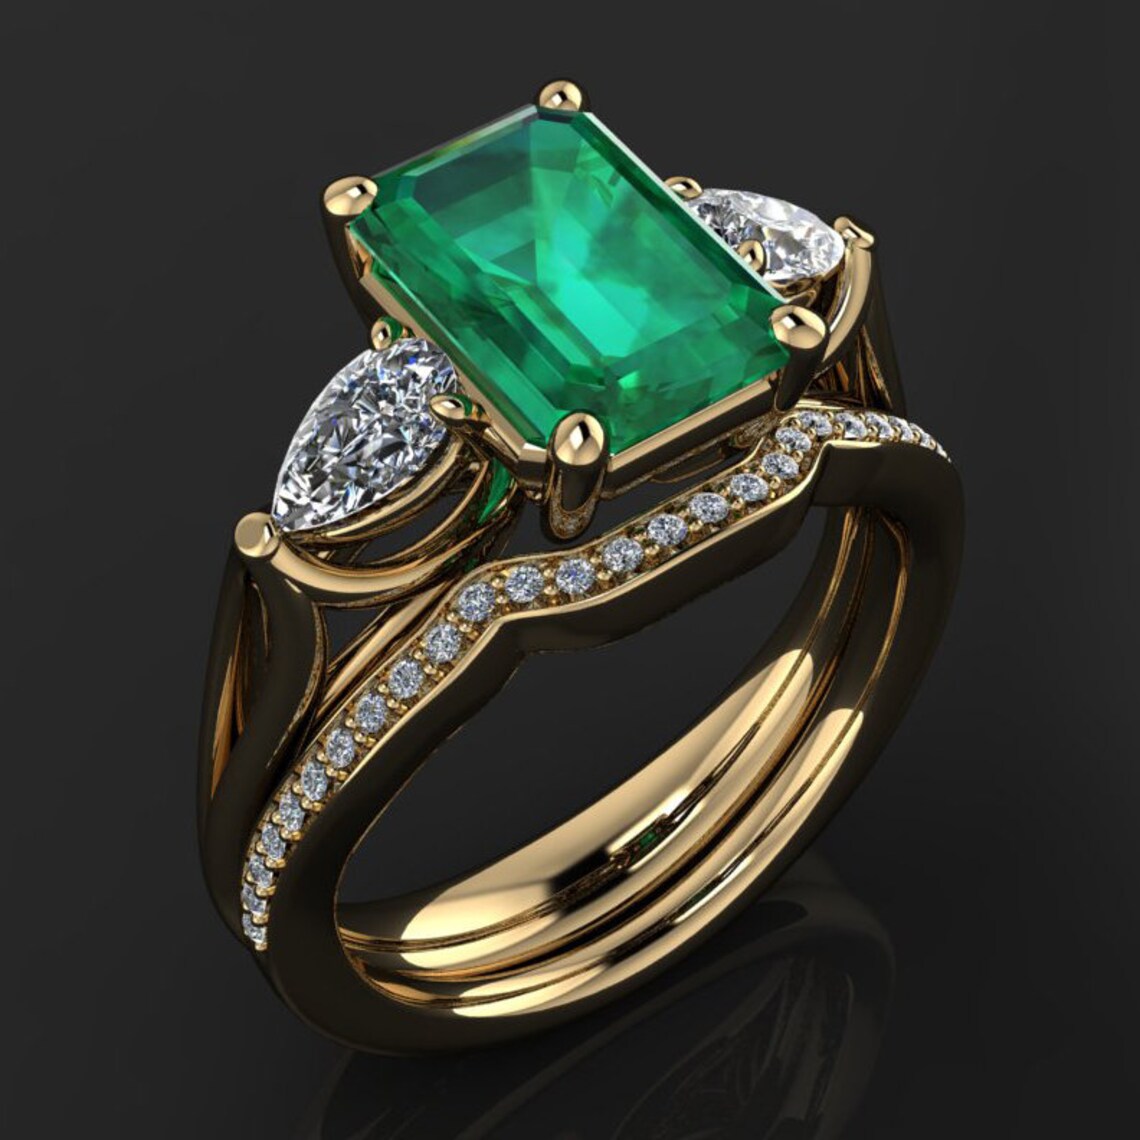 Crazy rich asians ring 2 carat green moissanite ring | Etsy